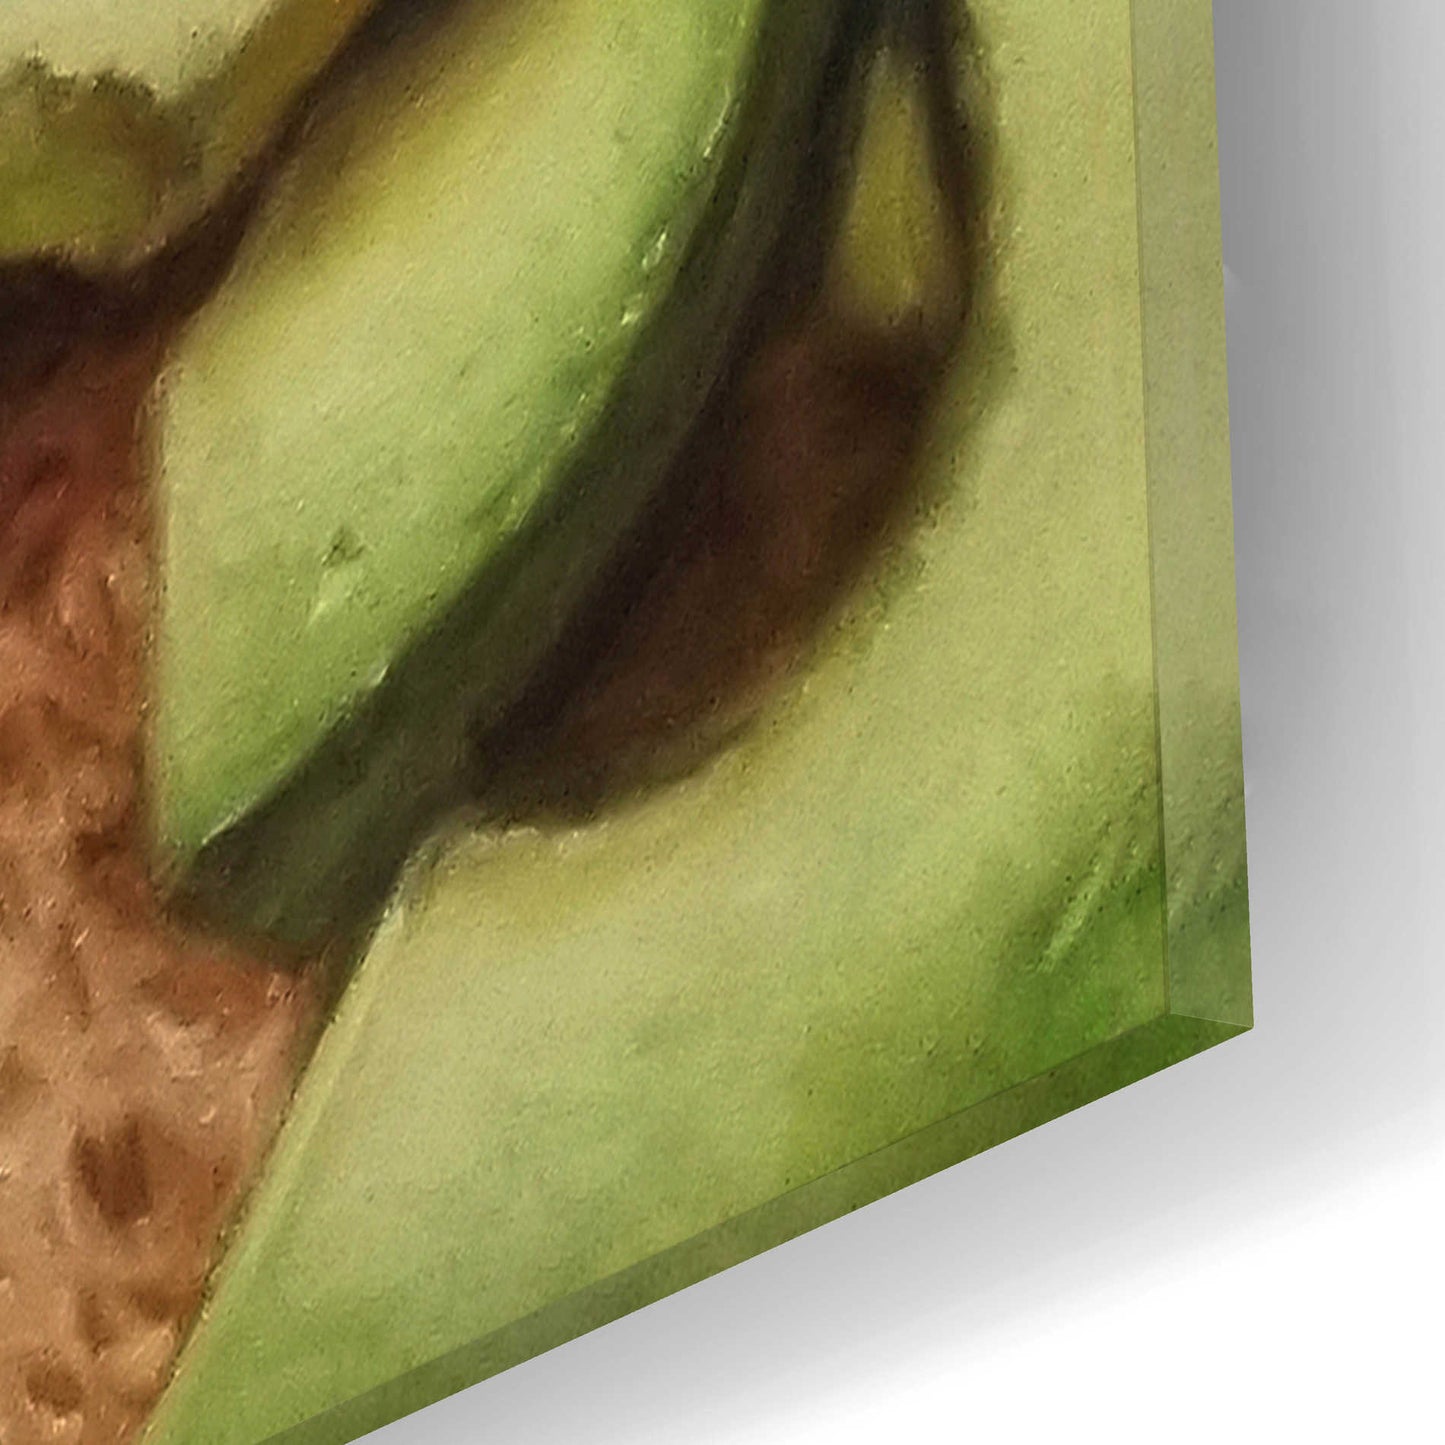 Epic Art 'Avocado Toast' by Lucia Heffernan, Acrylic Glass Wall Art,12x12